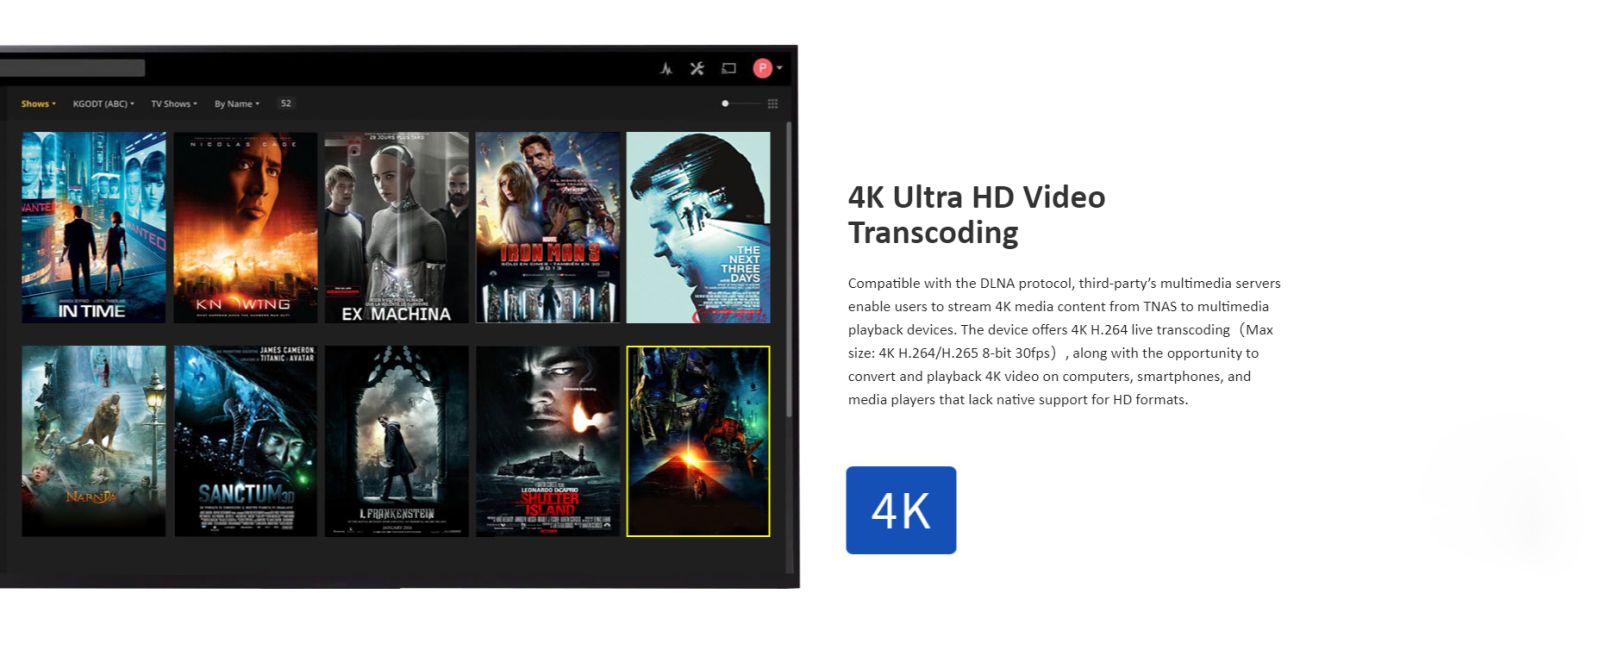 4K Utlra HD Video Transcoding